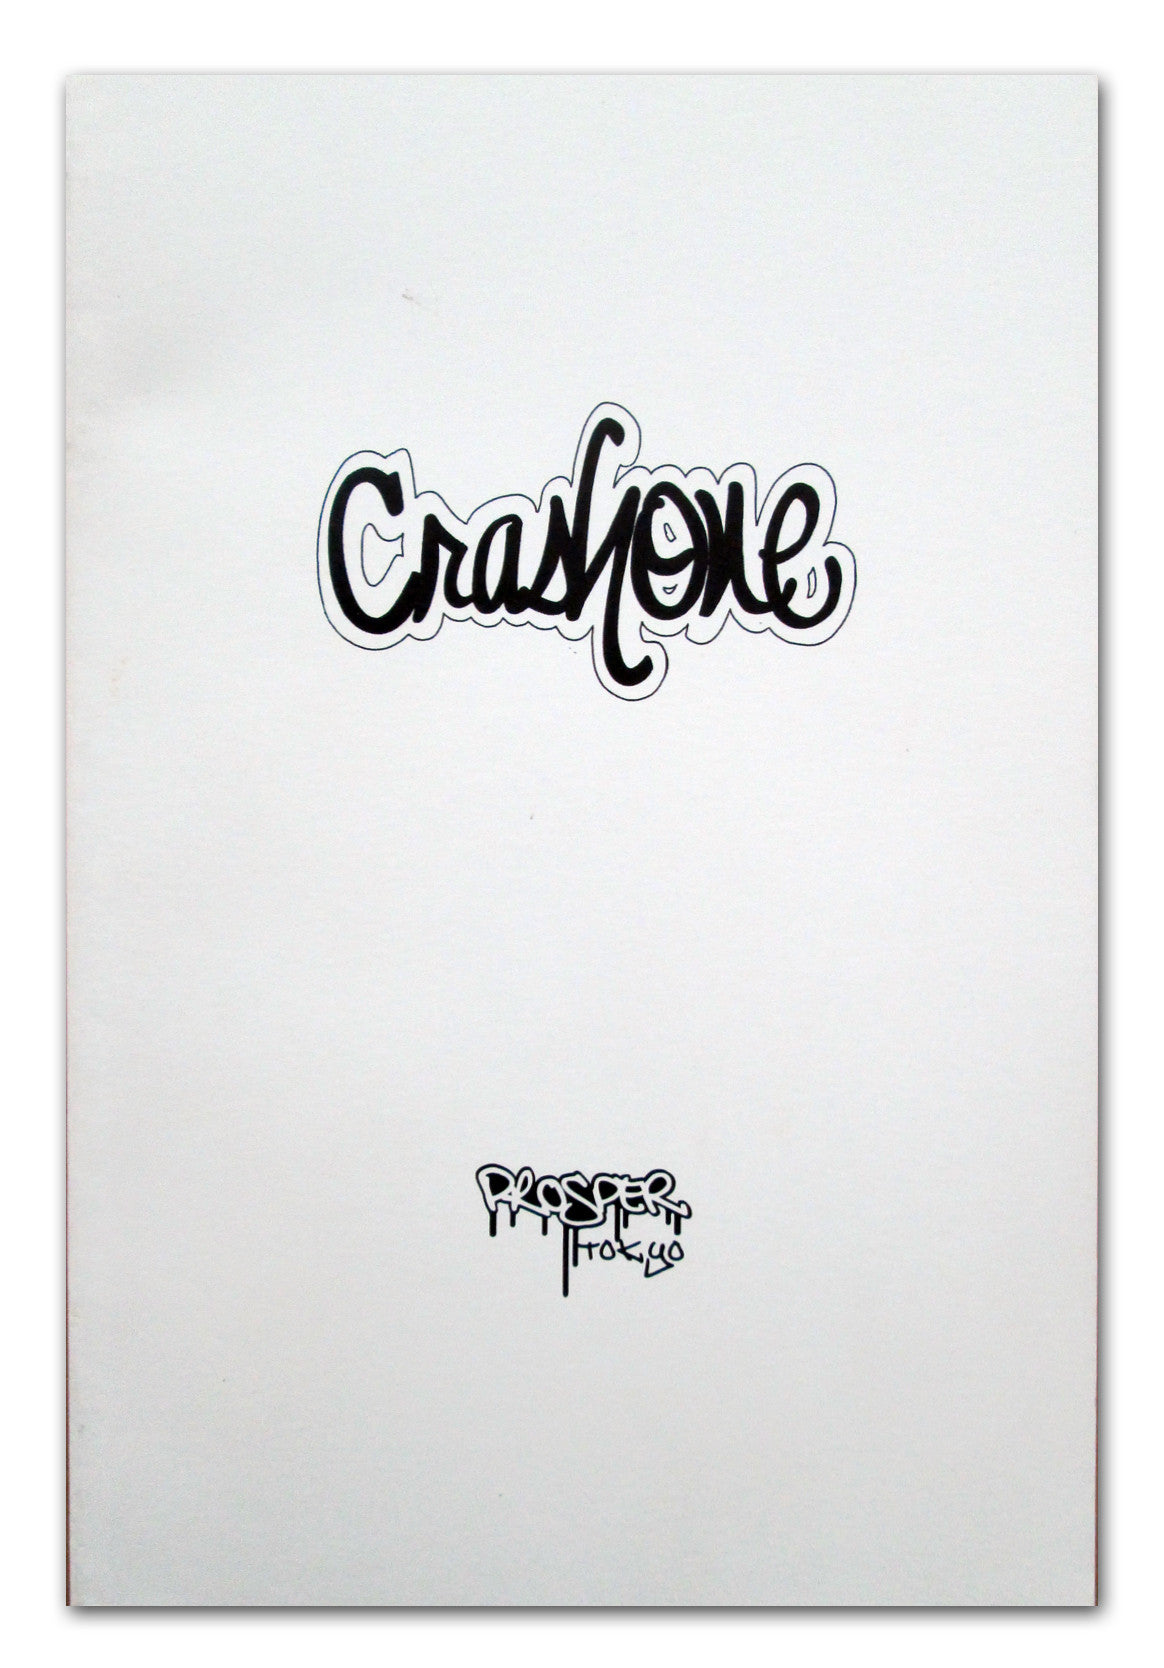 CRASH ONE -  "Prosper" Booklet/Zine